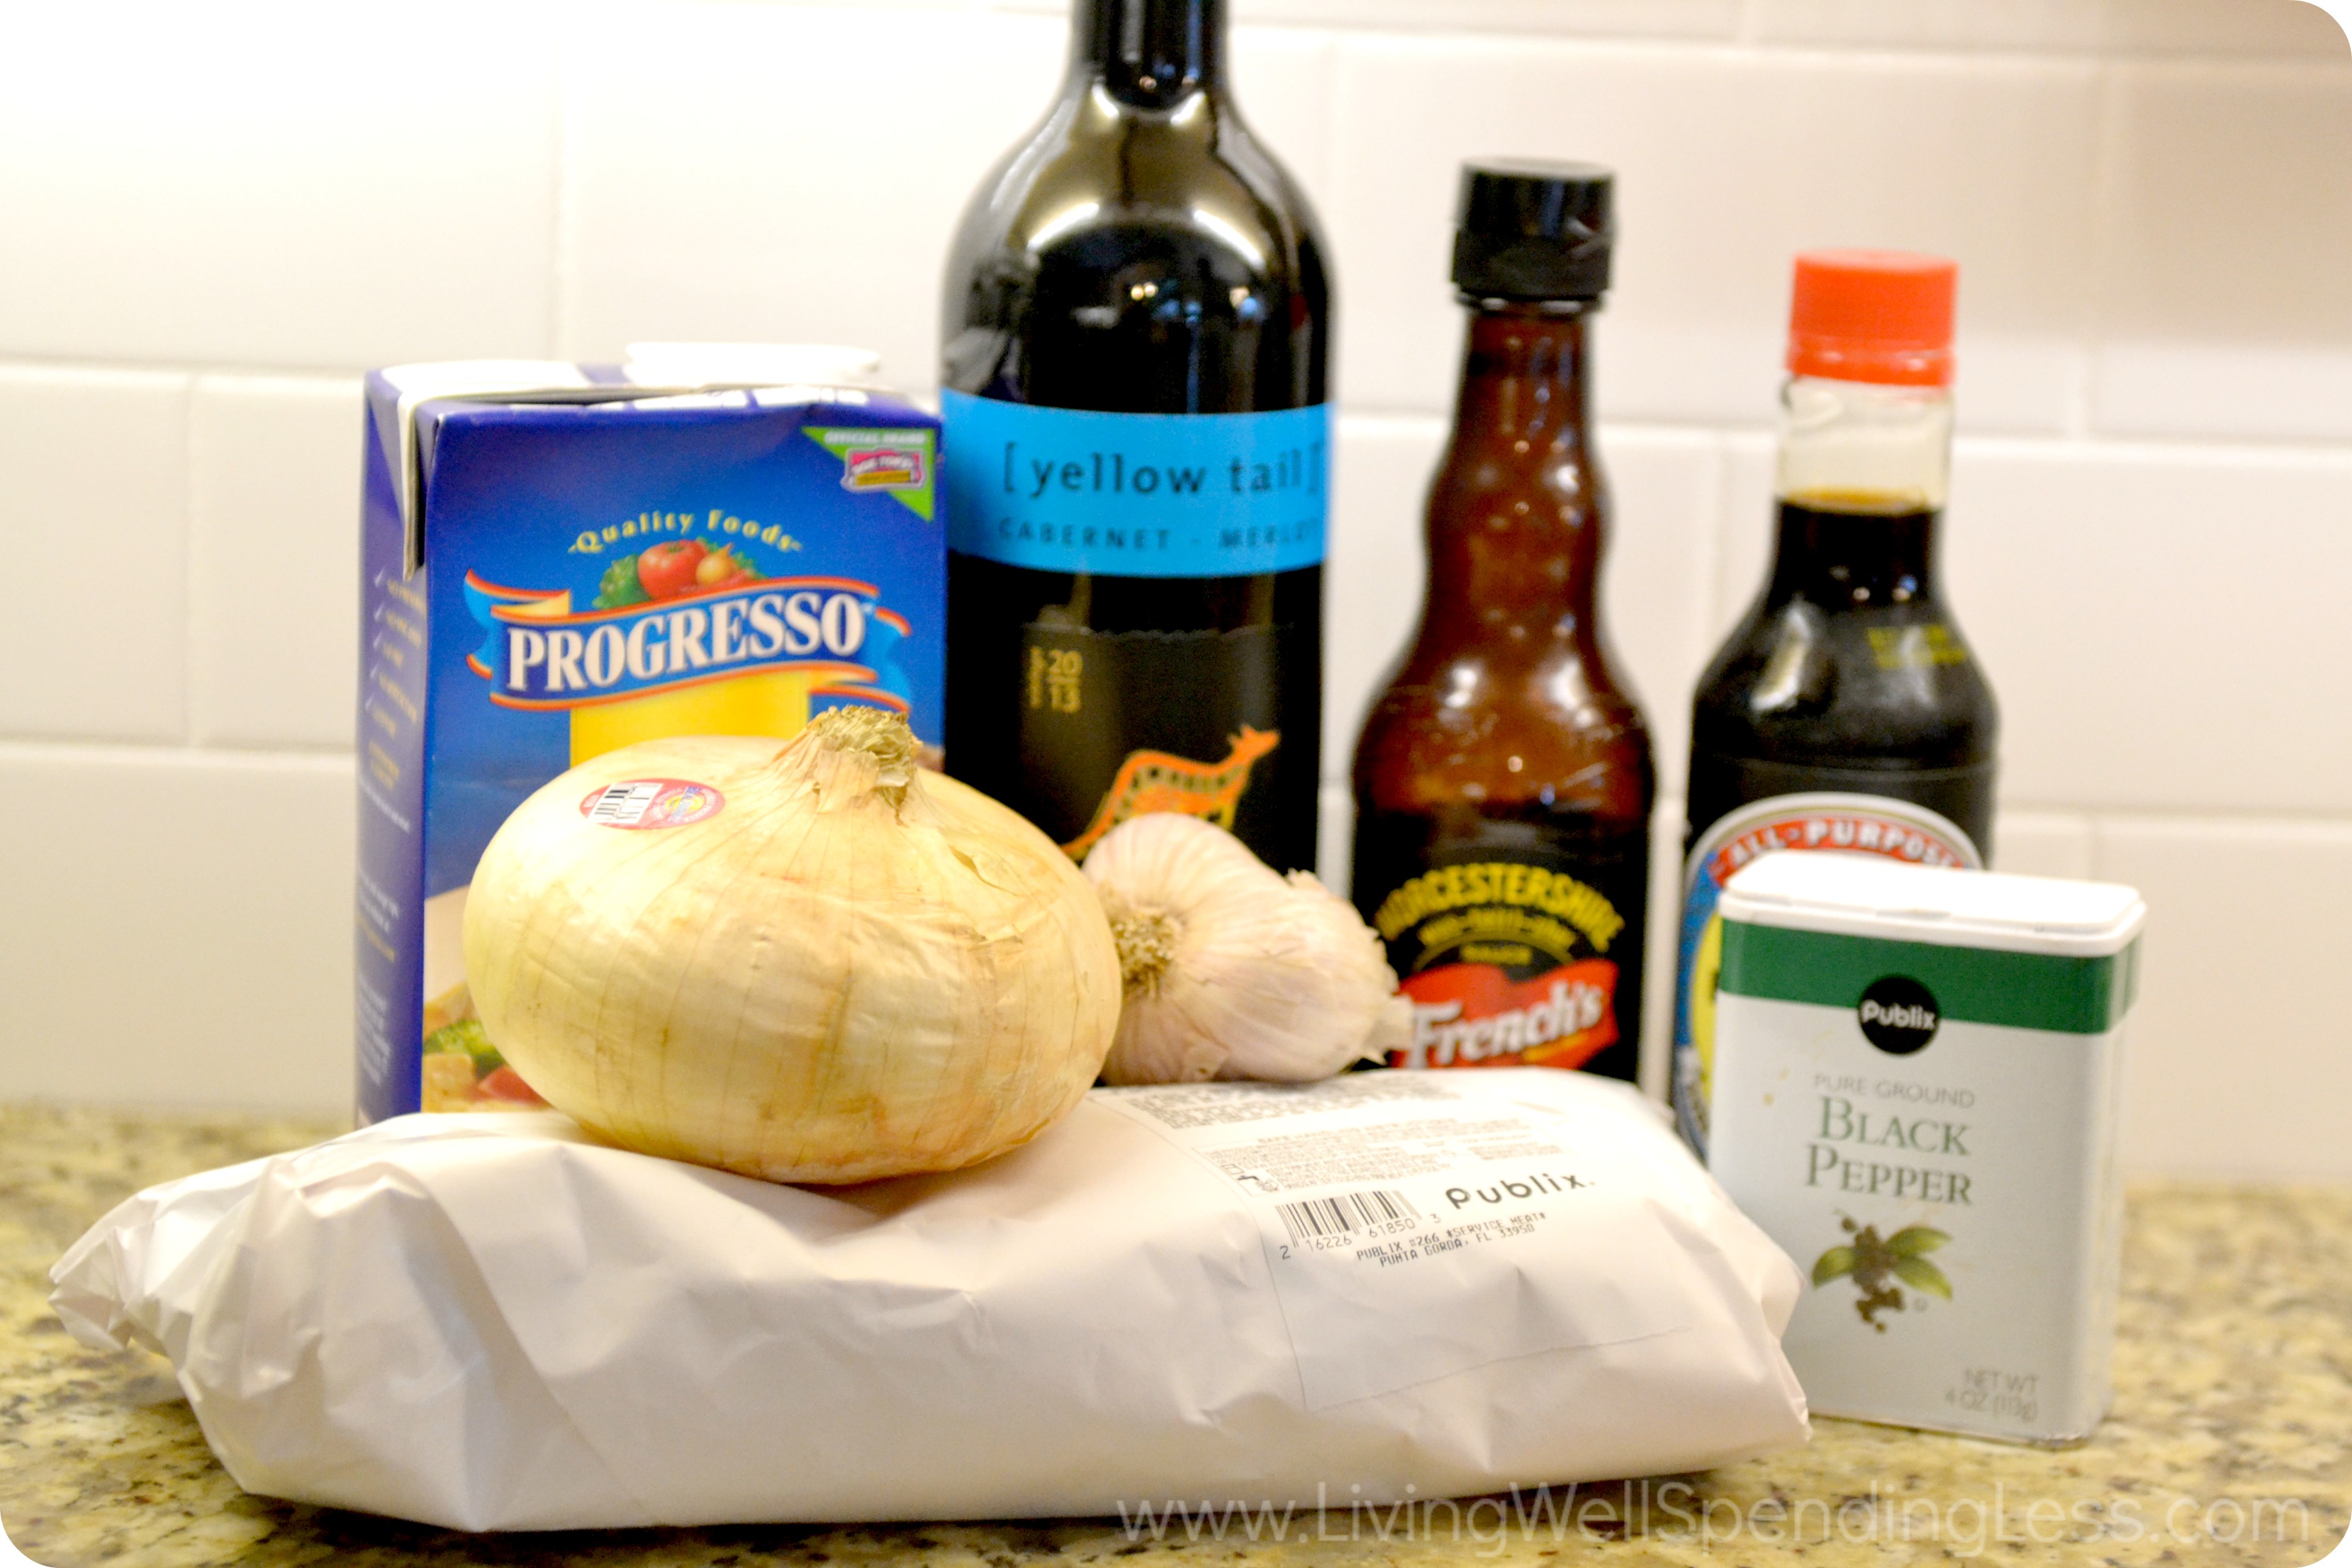 Slow cooked pork tenderloin ingredients: Broth, wine, Worcestershire sauce, soy, onion and pork tenderloin. 